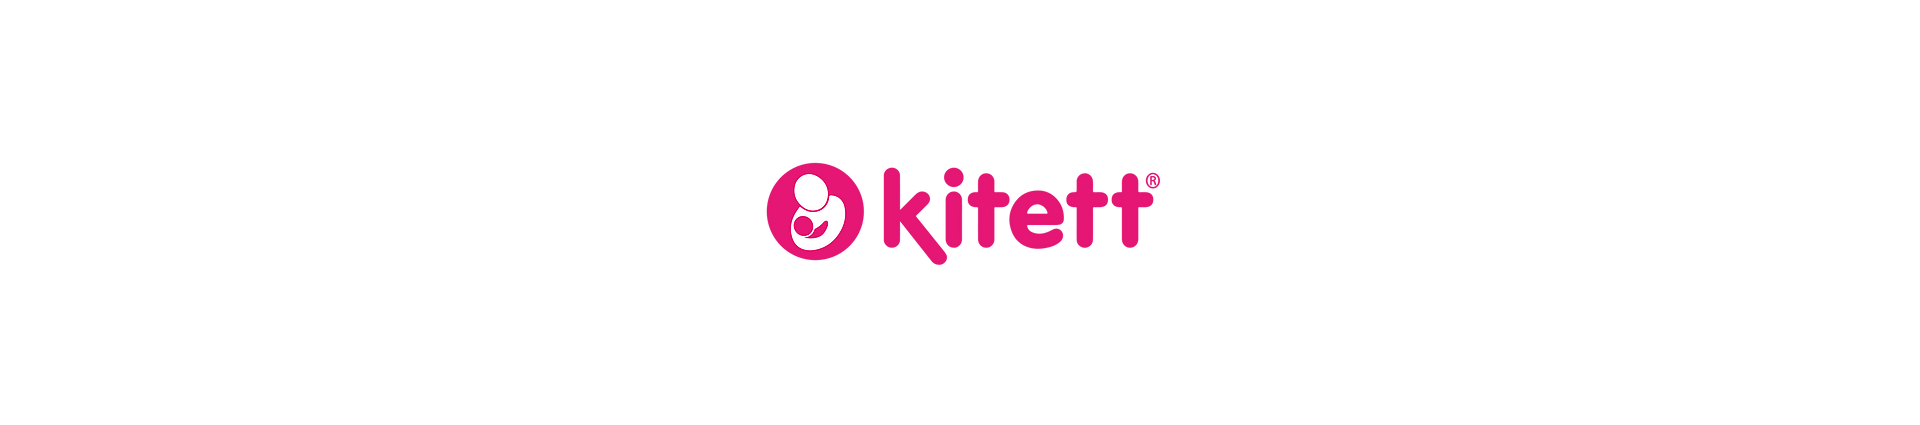 kitett